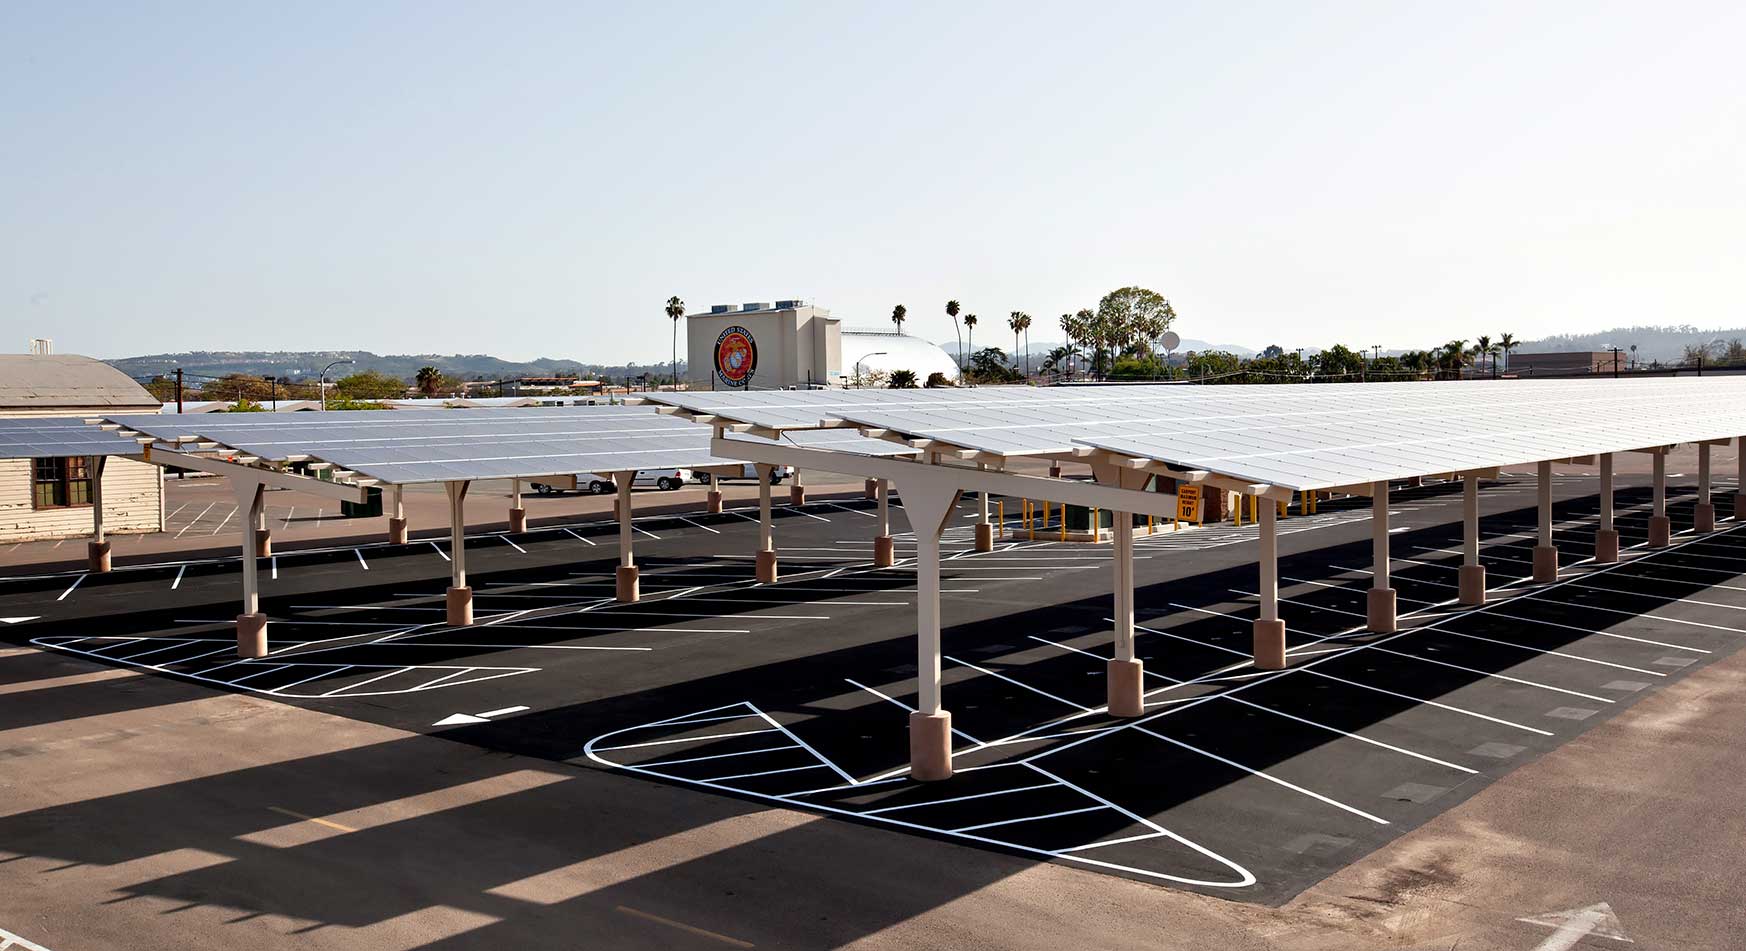 Raised solar panels shade a parking lot